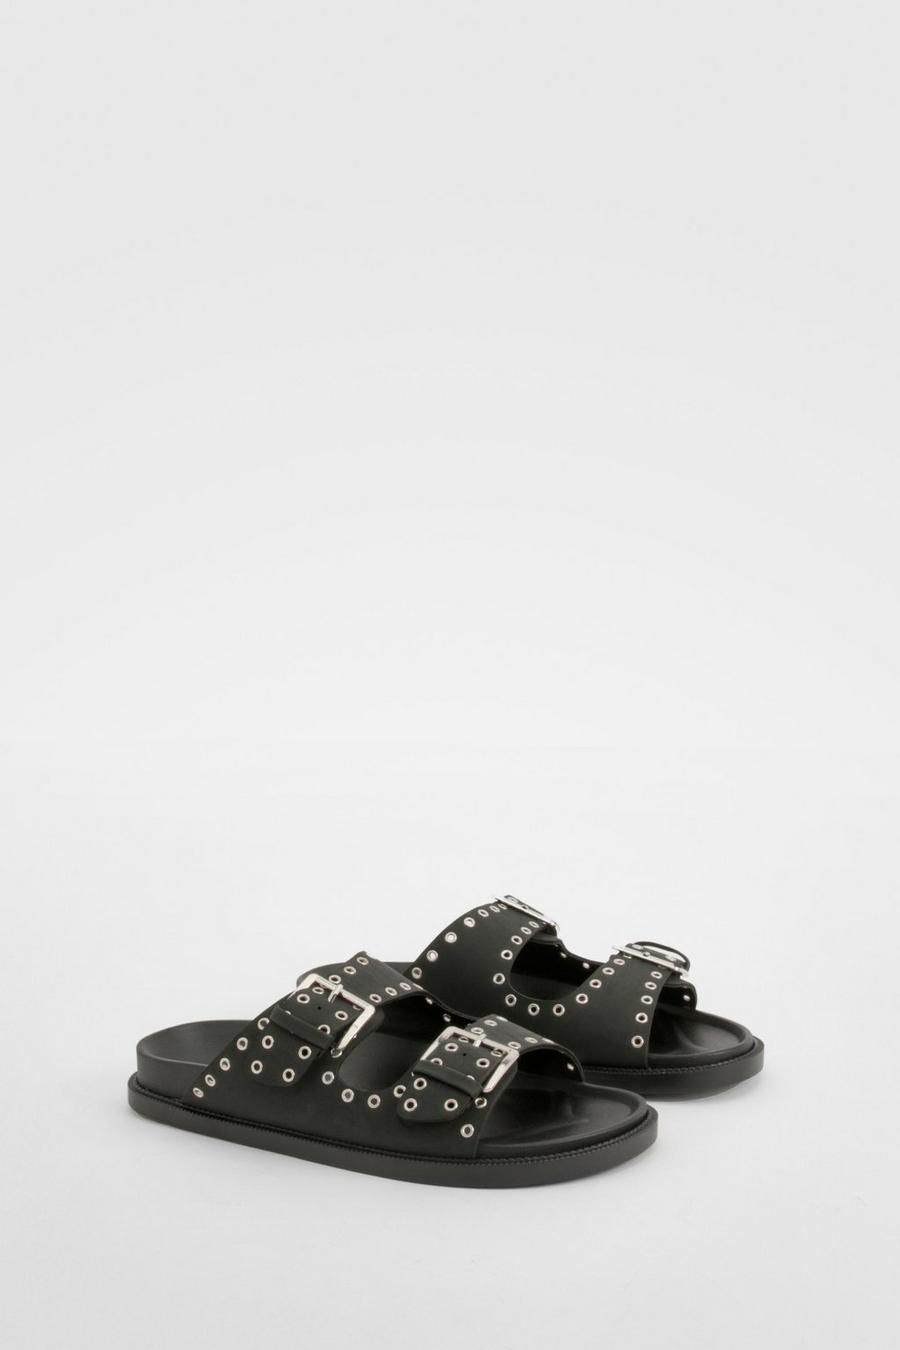 Sandalias de holgura ancha con dos tiras y tachuelas, Black